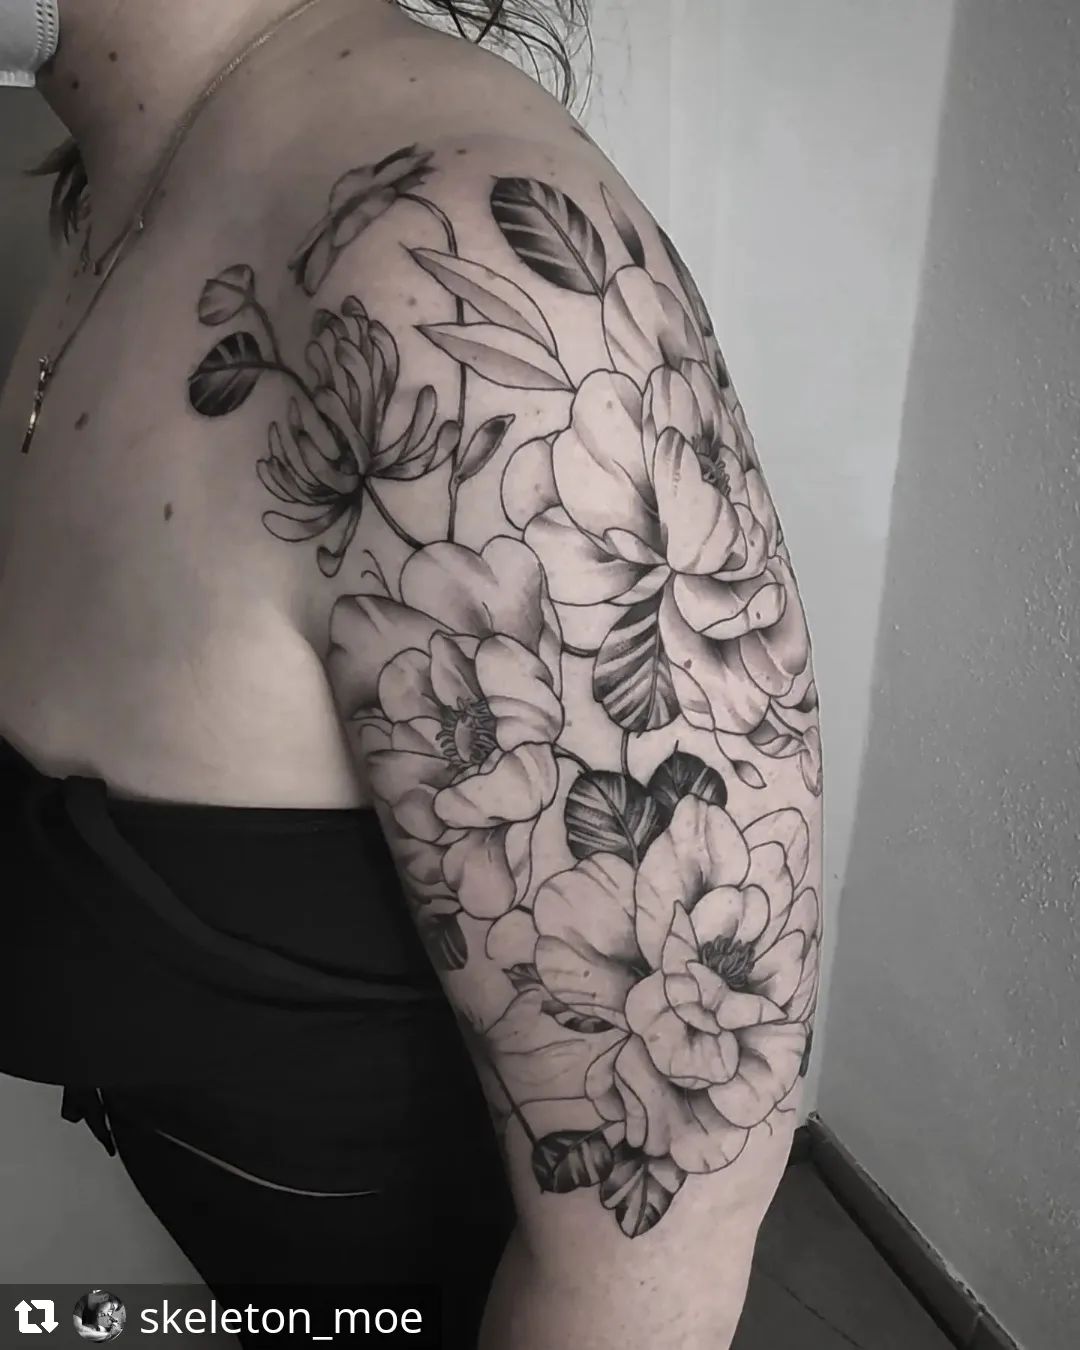 Neu von @skeleton_moe
• • • • • •
Flowers for homegirl @staemlee 
.
.
.
.
#tatto